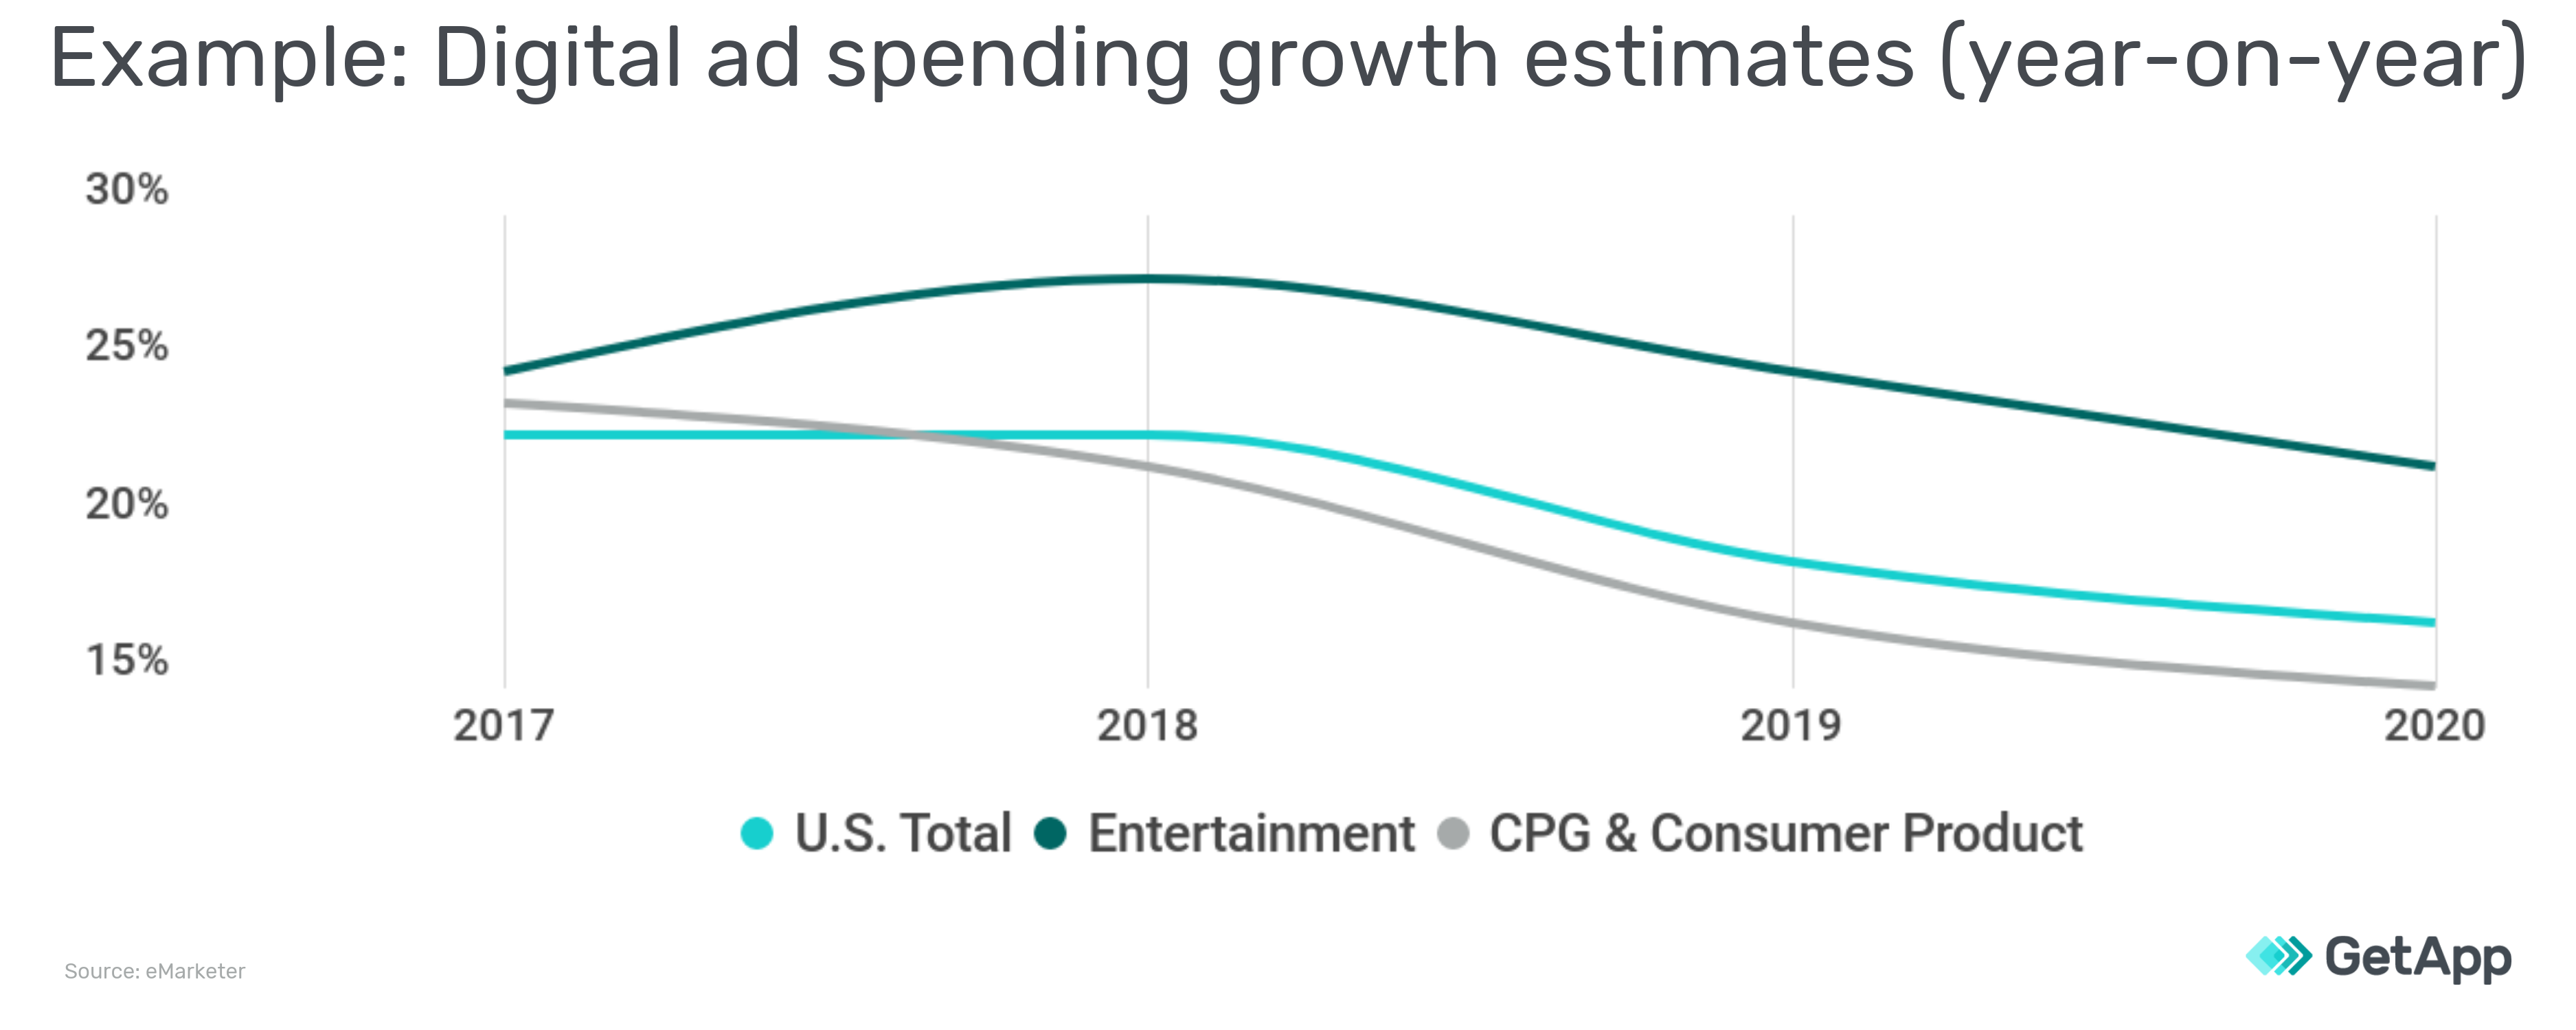 digital-ad-spending-growth-estimates-2017-2020-us-total-entertainment-CPG